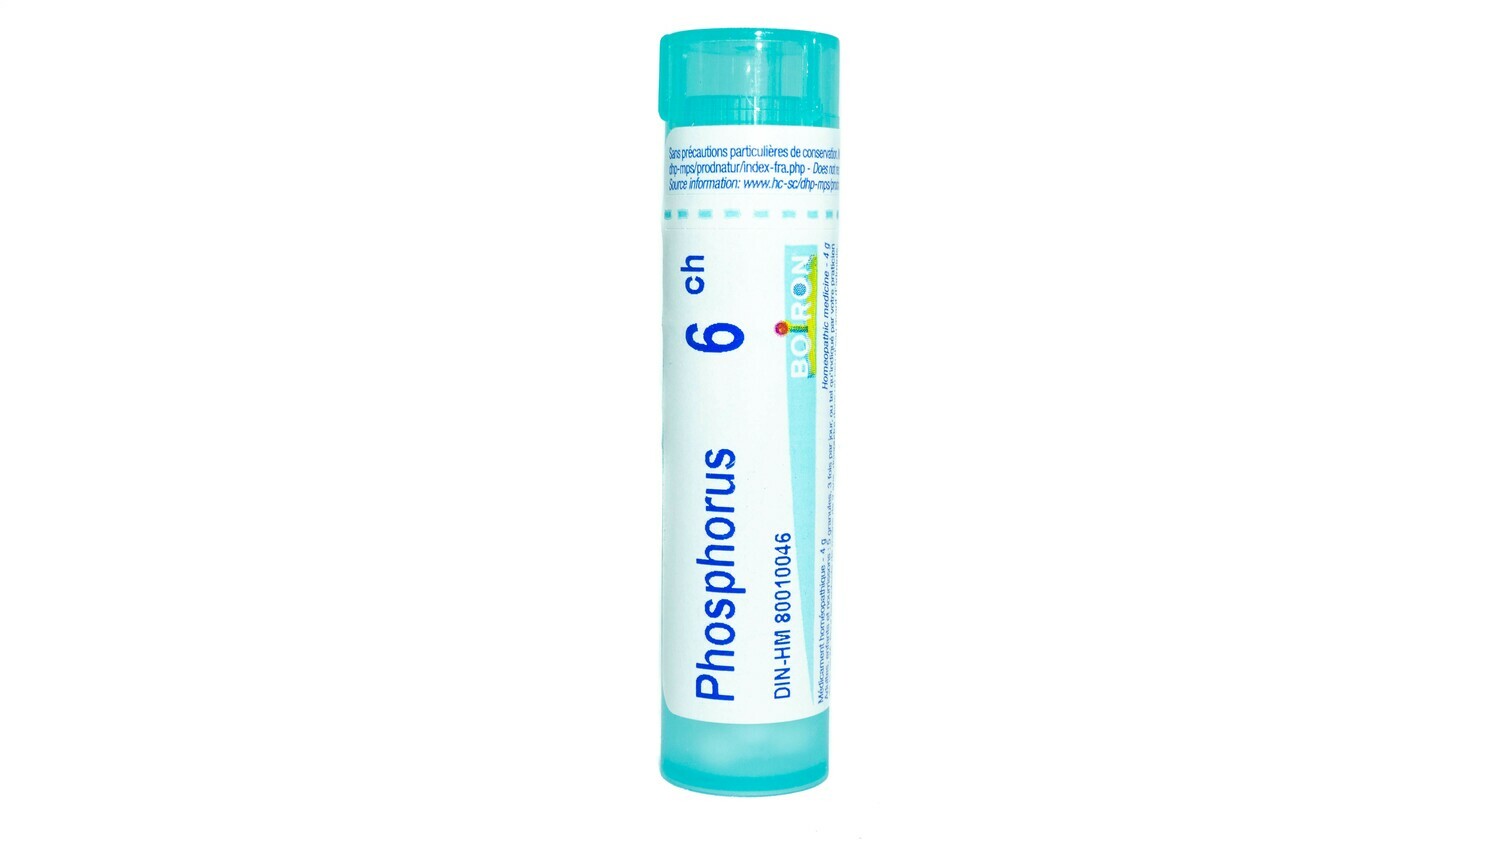 Phosphorus (6CH) By Boiron